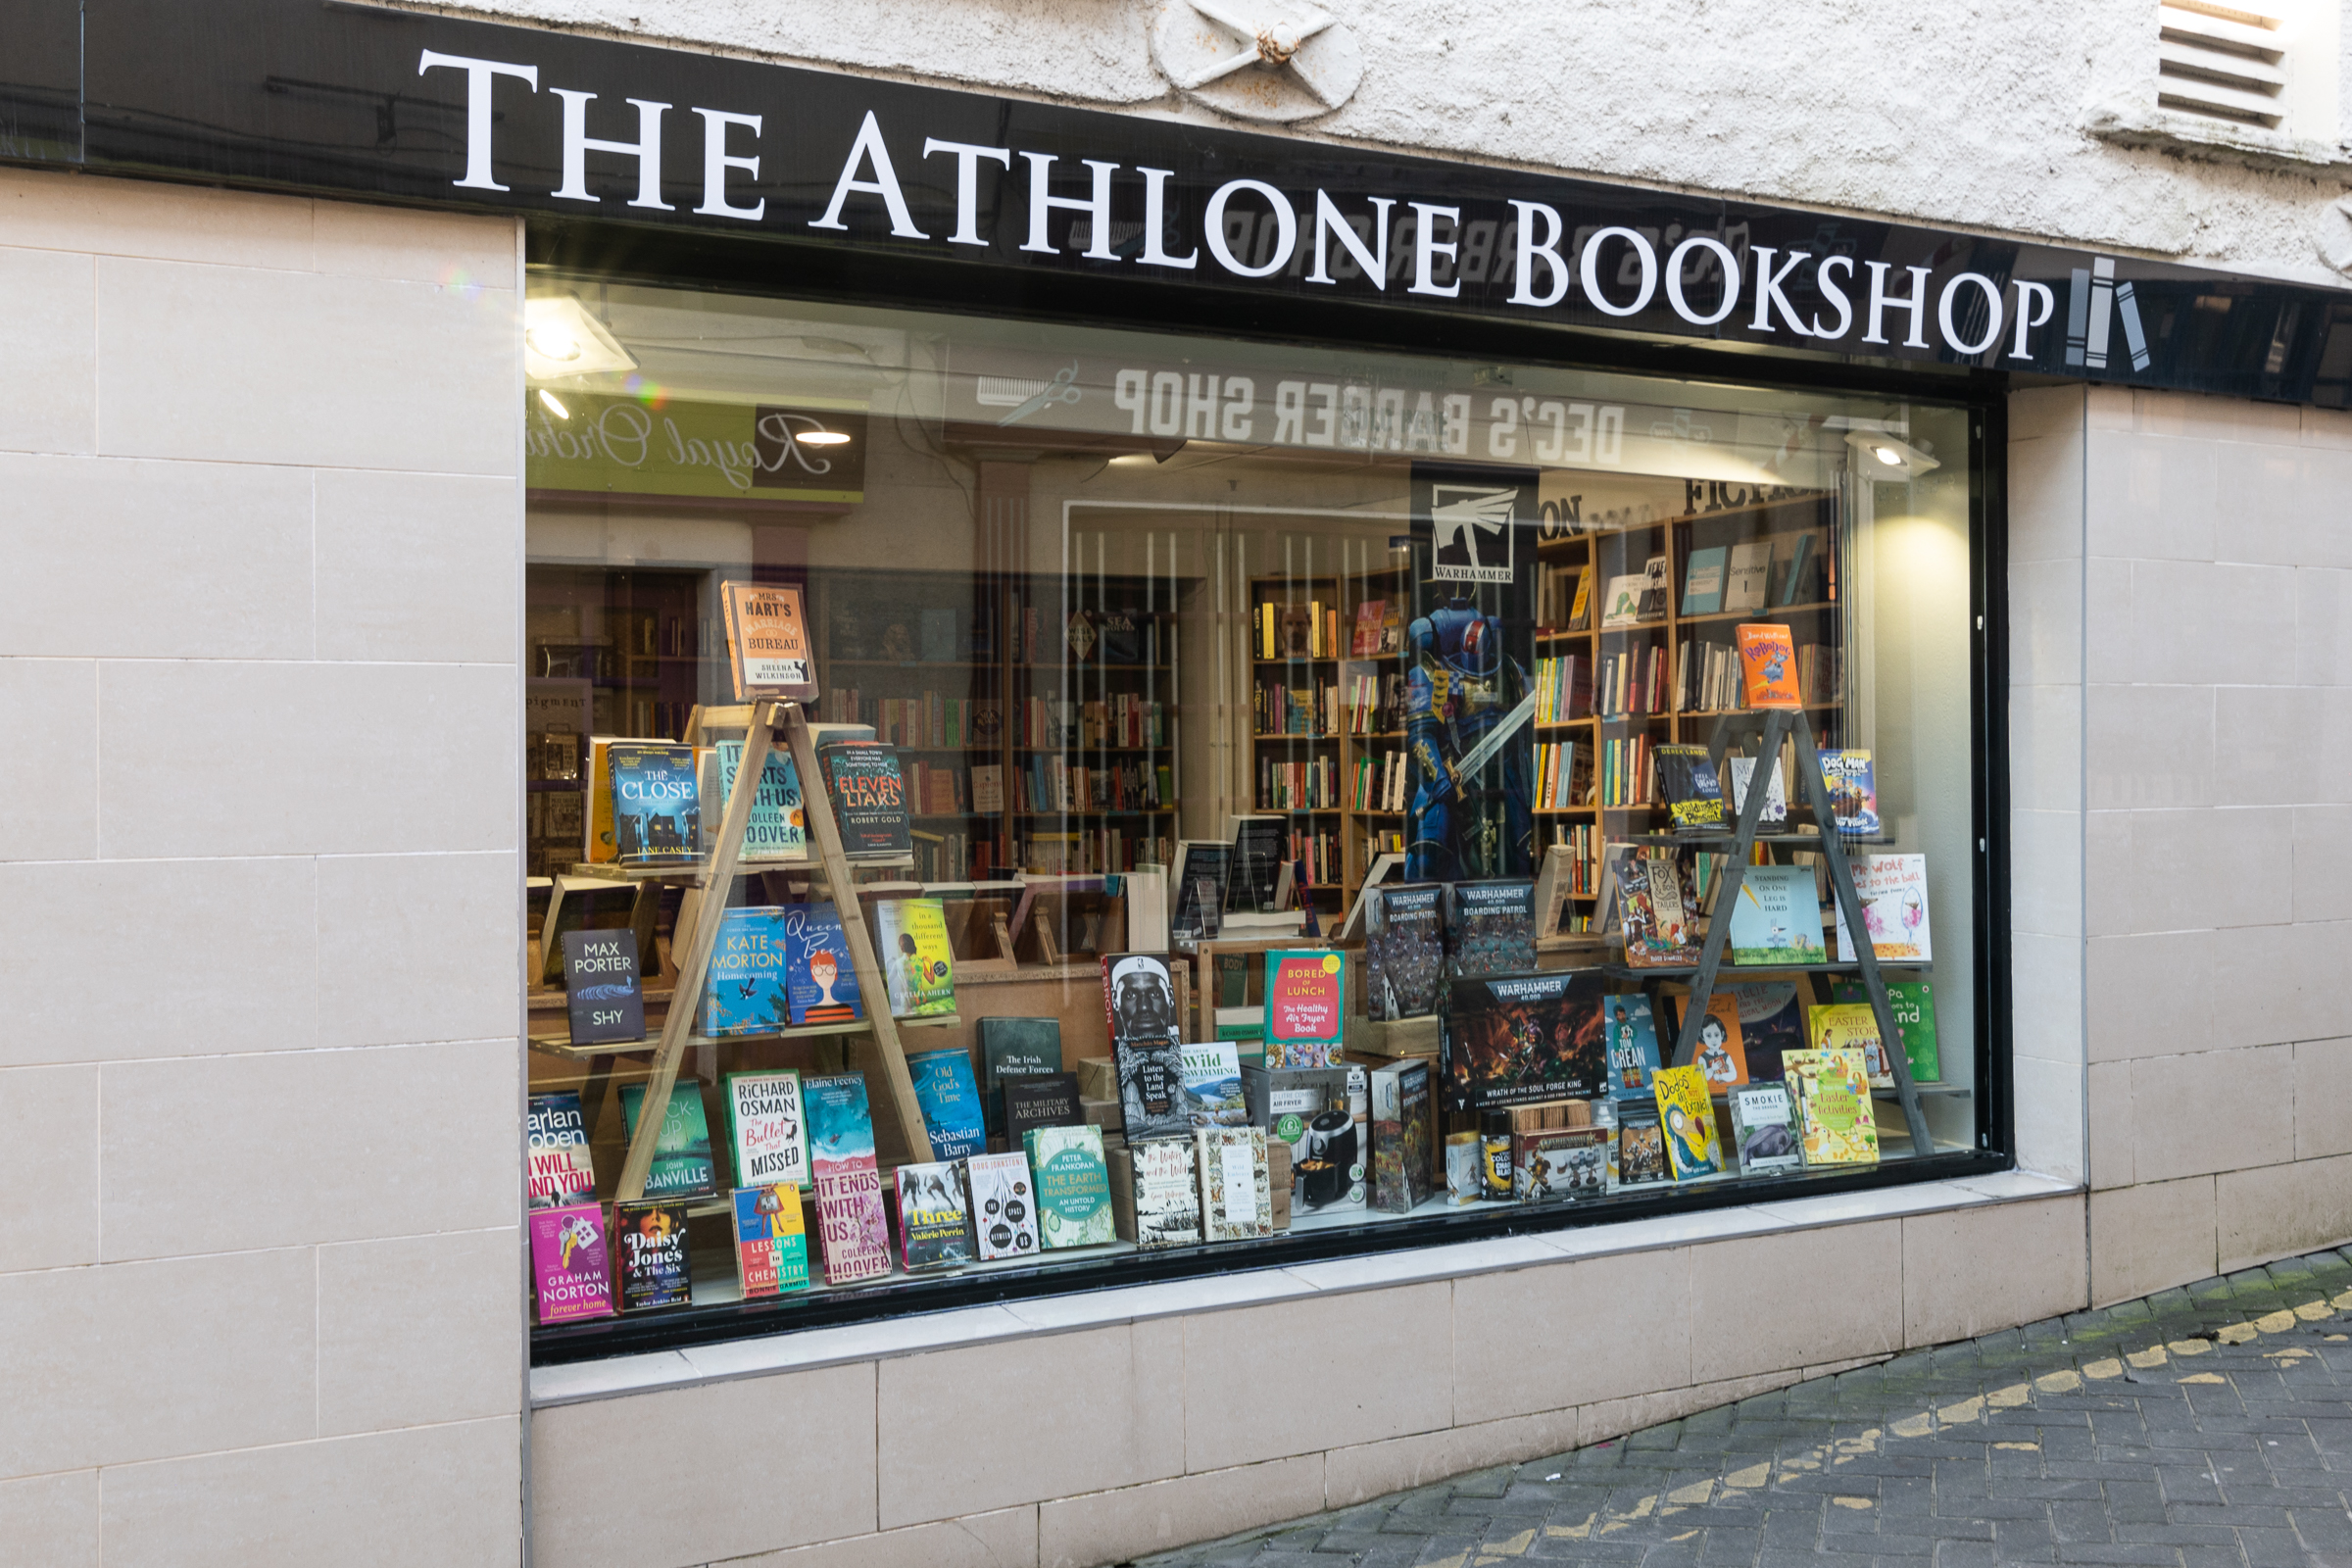 Athlone Bookshop window